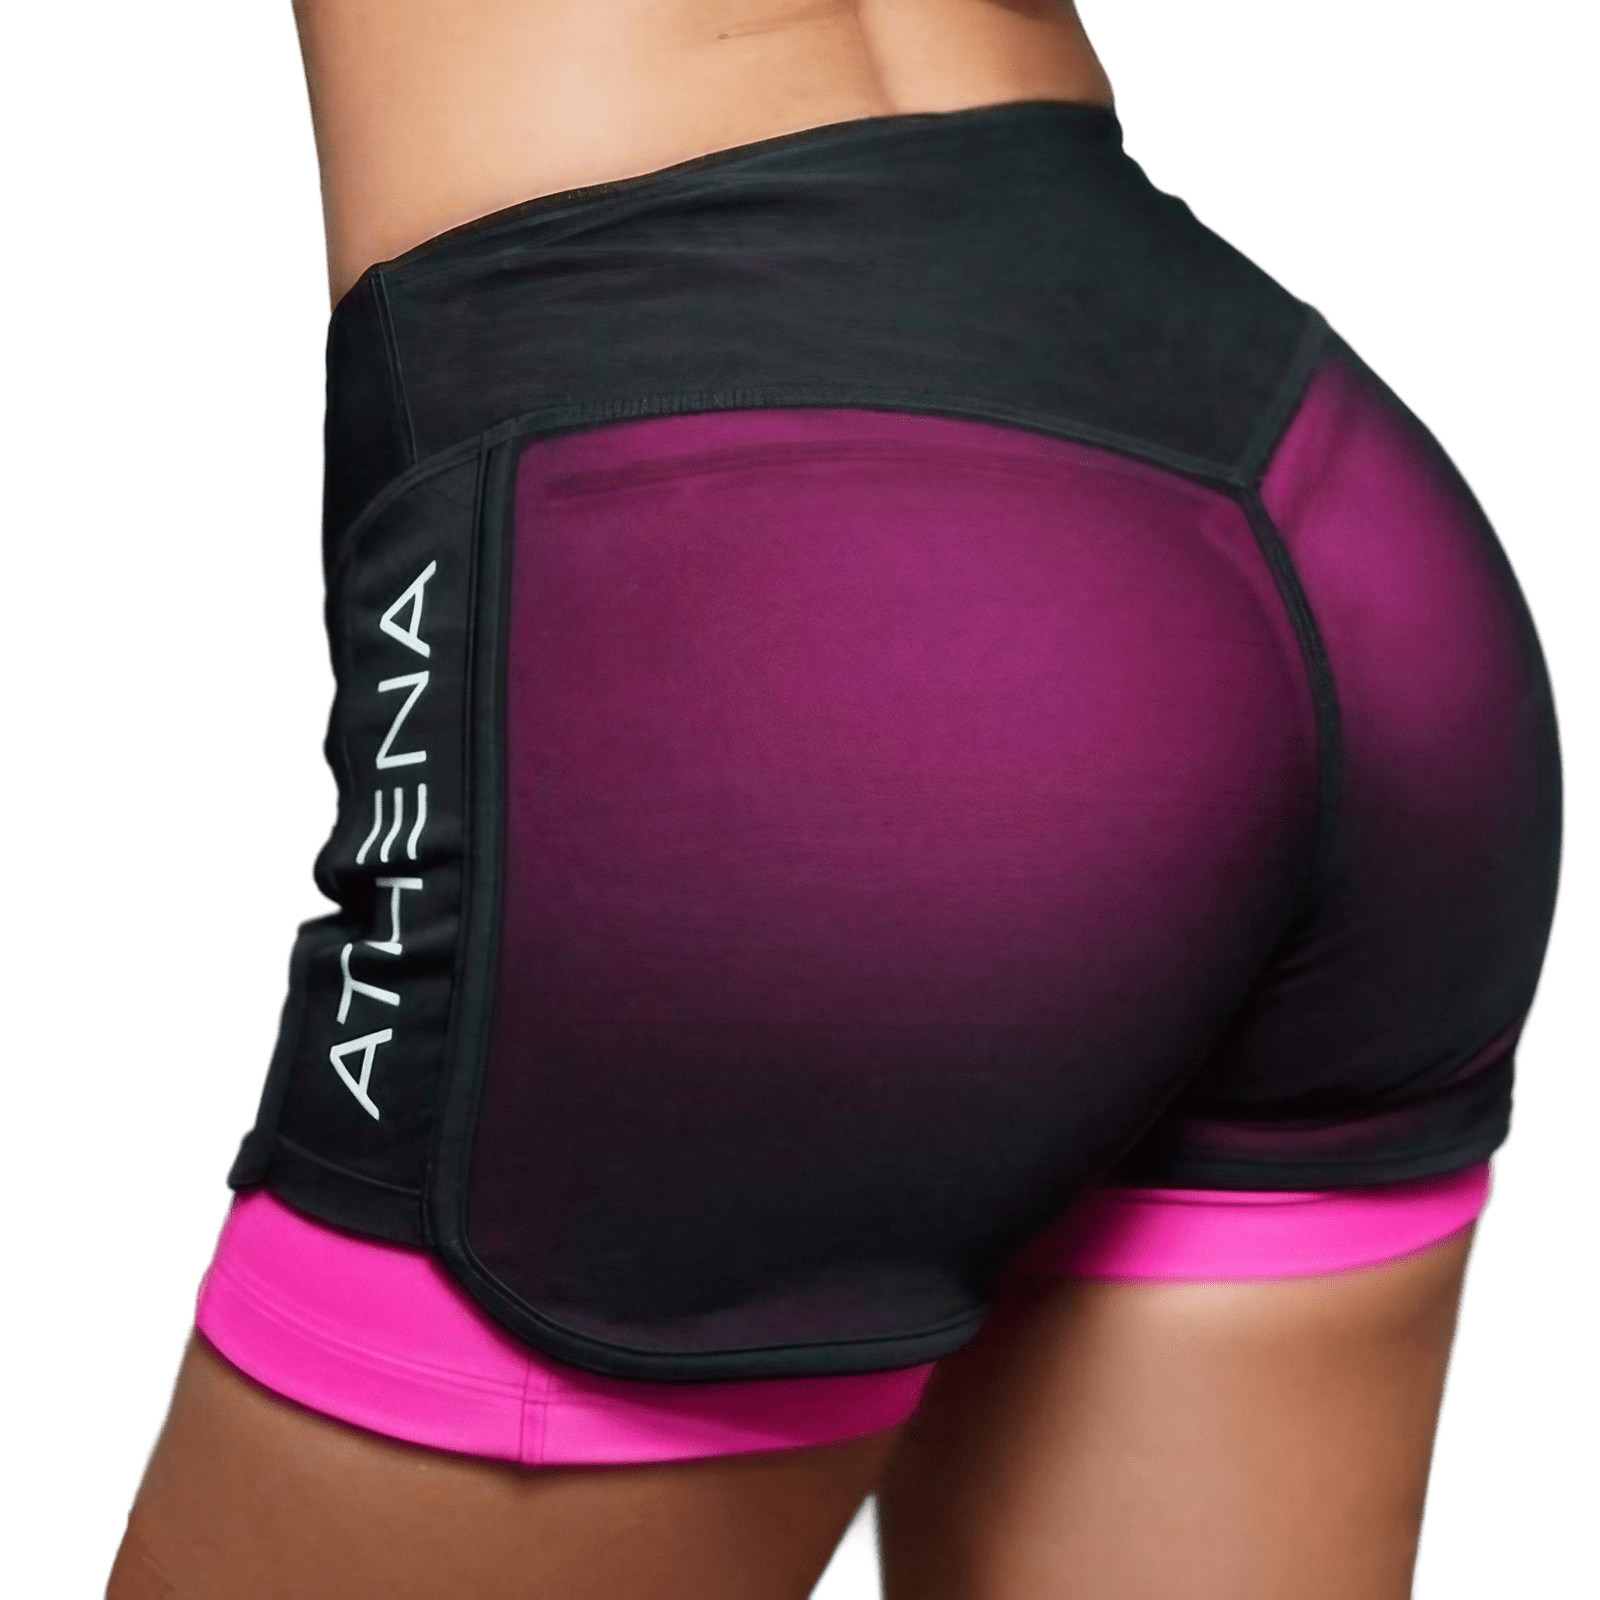 ALLRJ Shorts Athena Sexy Women's Workout Shorts